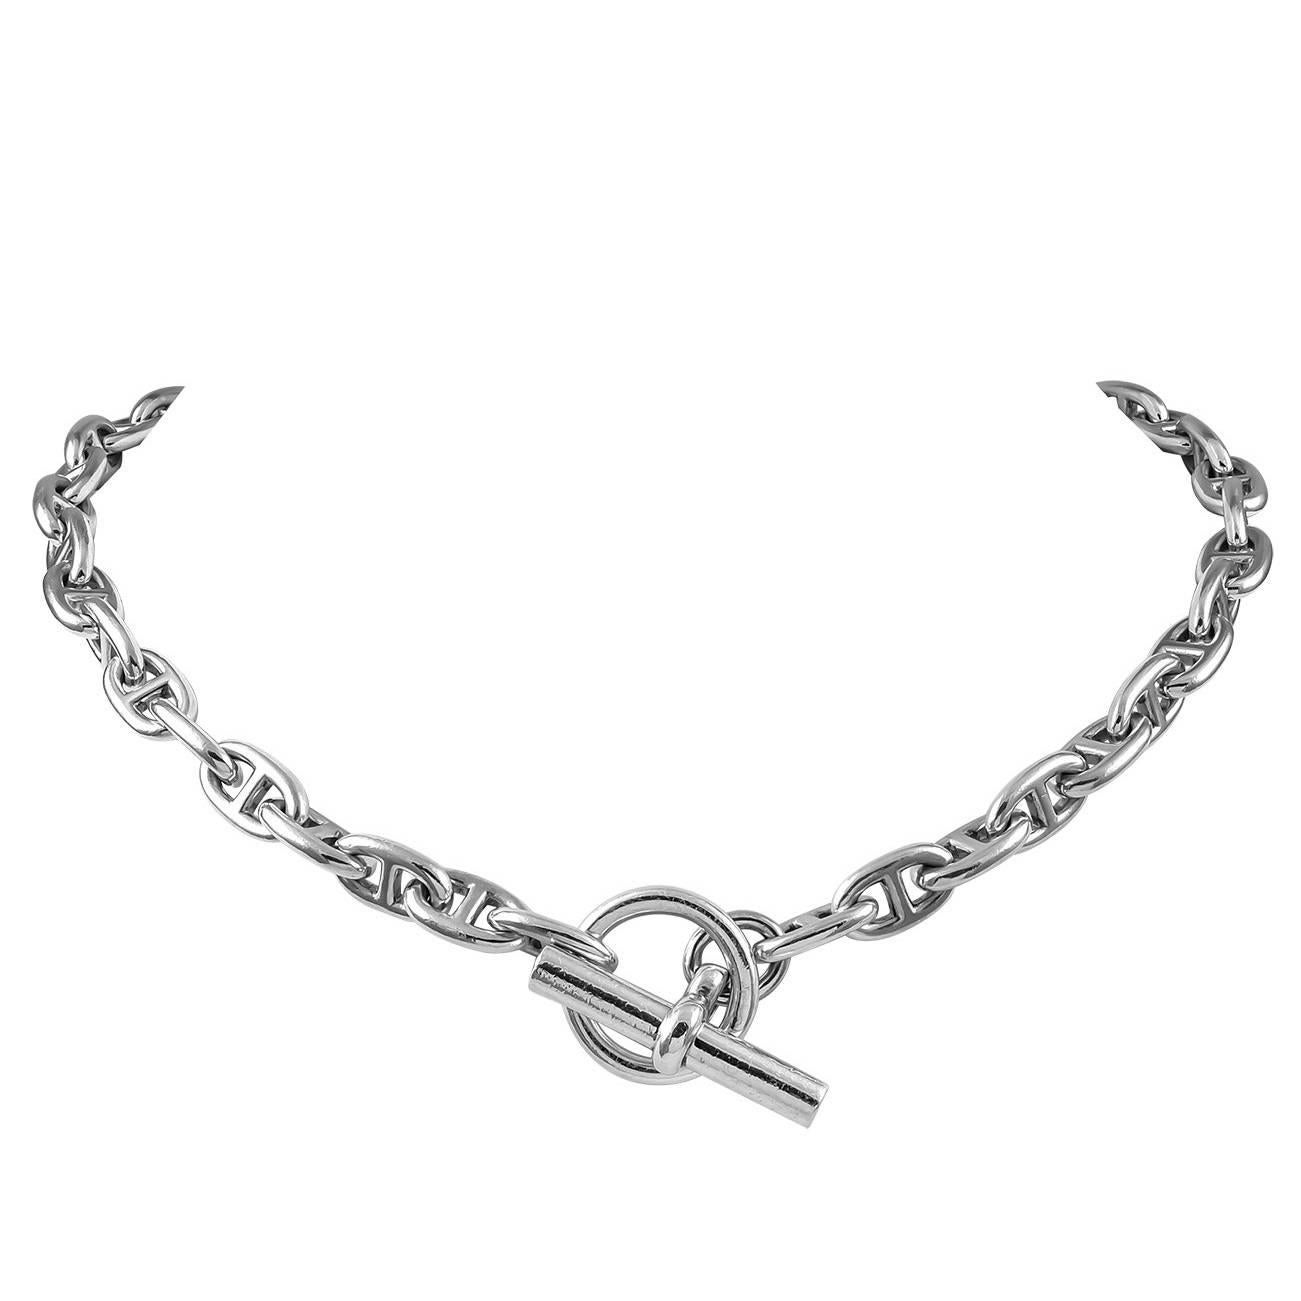 Hermes Paris Sterling Silver Necklace